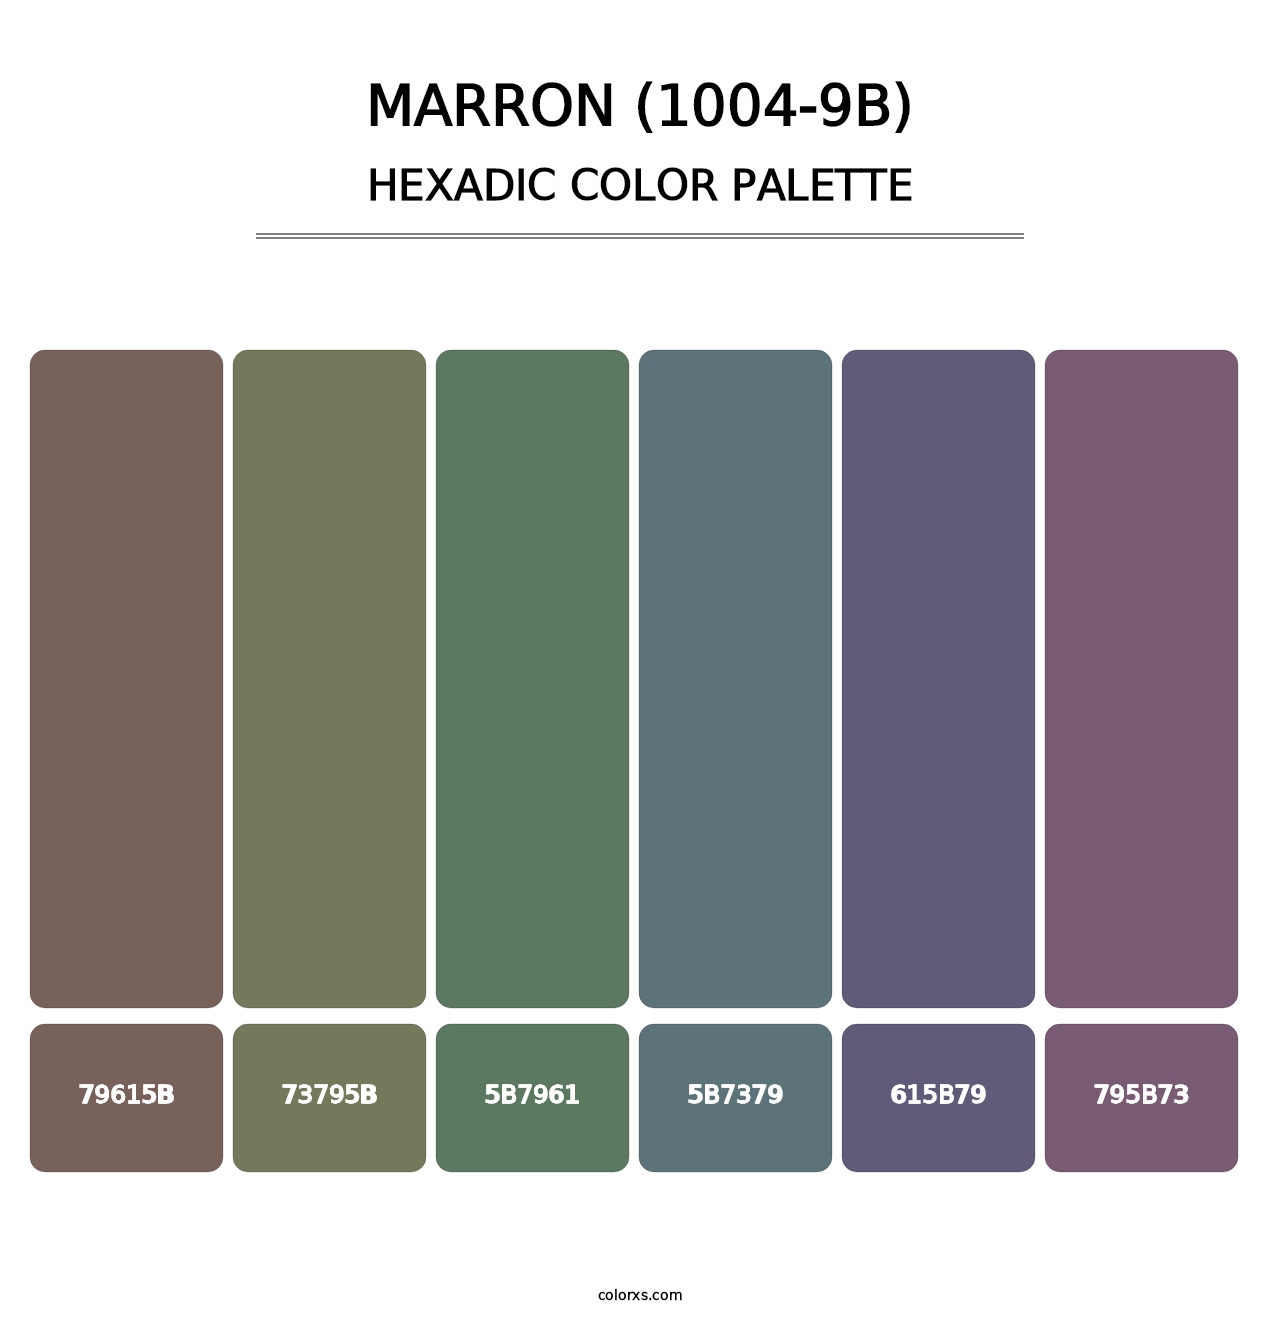 Marron (1004-9B) - Hexadic Color Palette